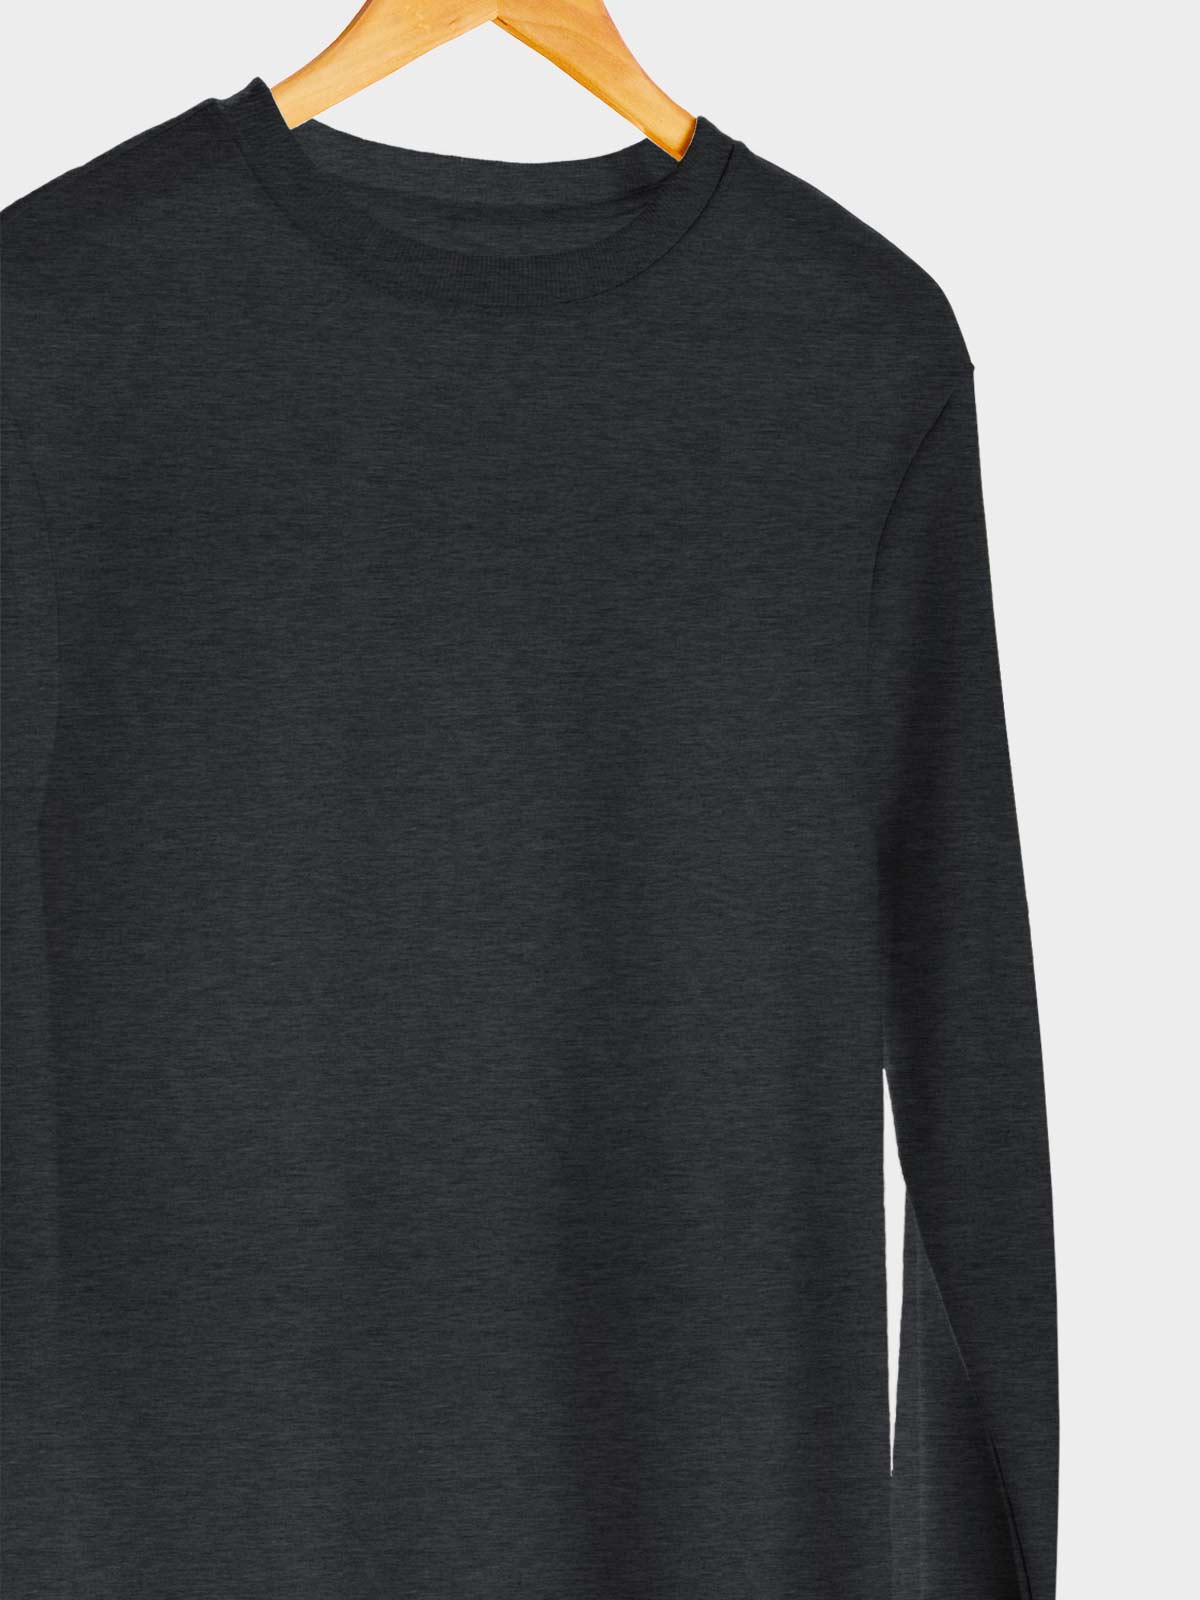 Arctic Blue & Dark Grey Unisex Plain Sweatshirt Combo